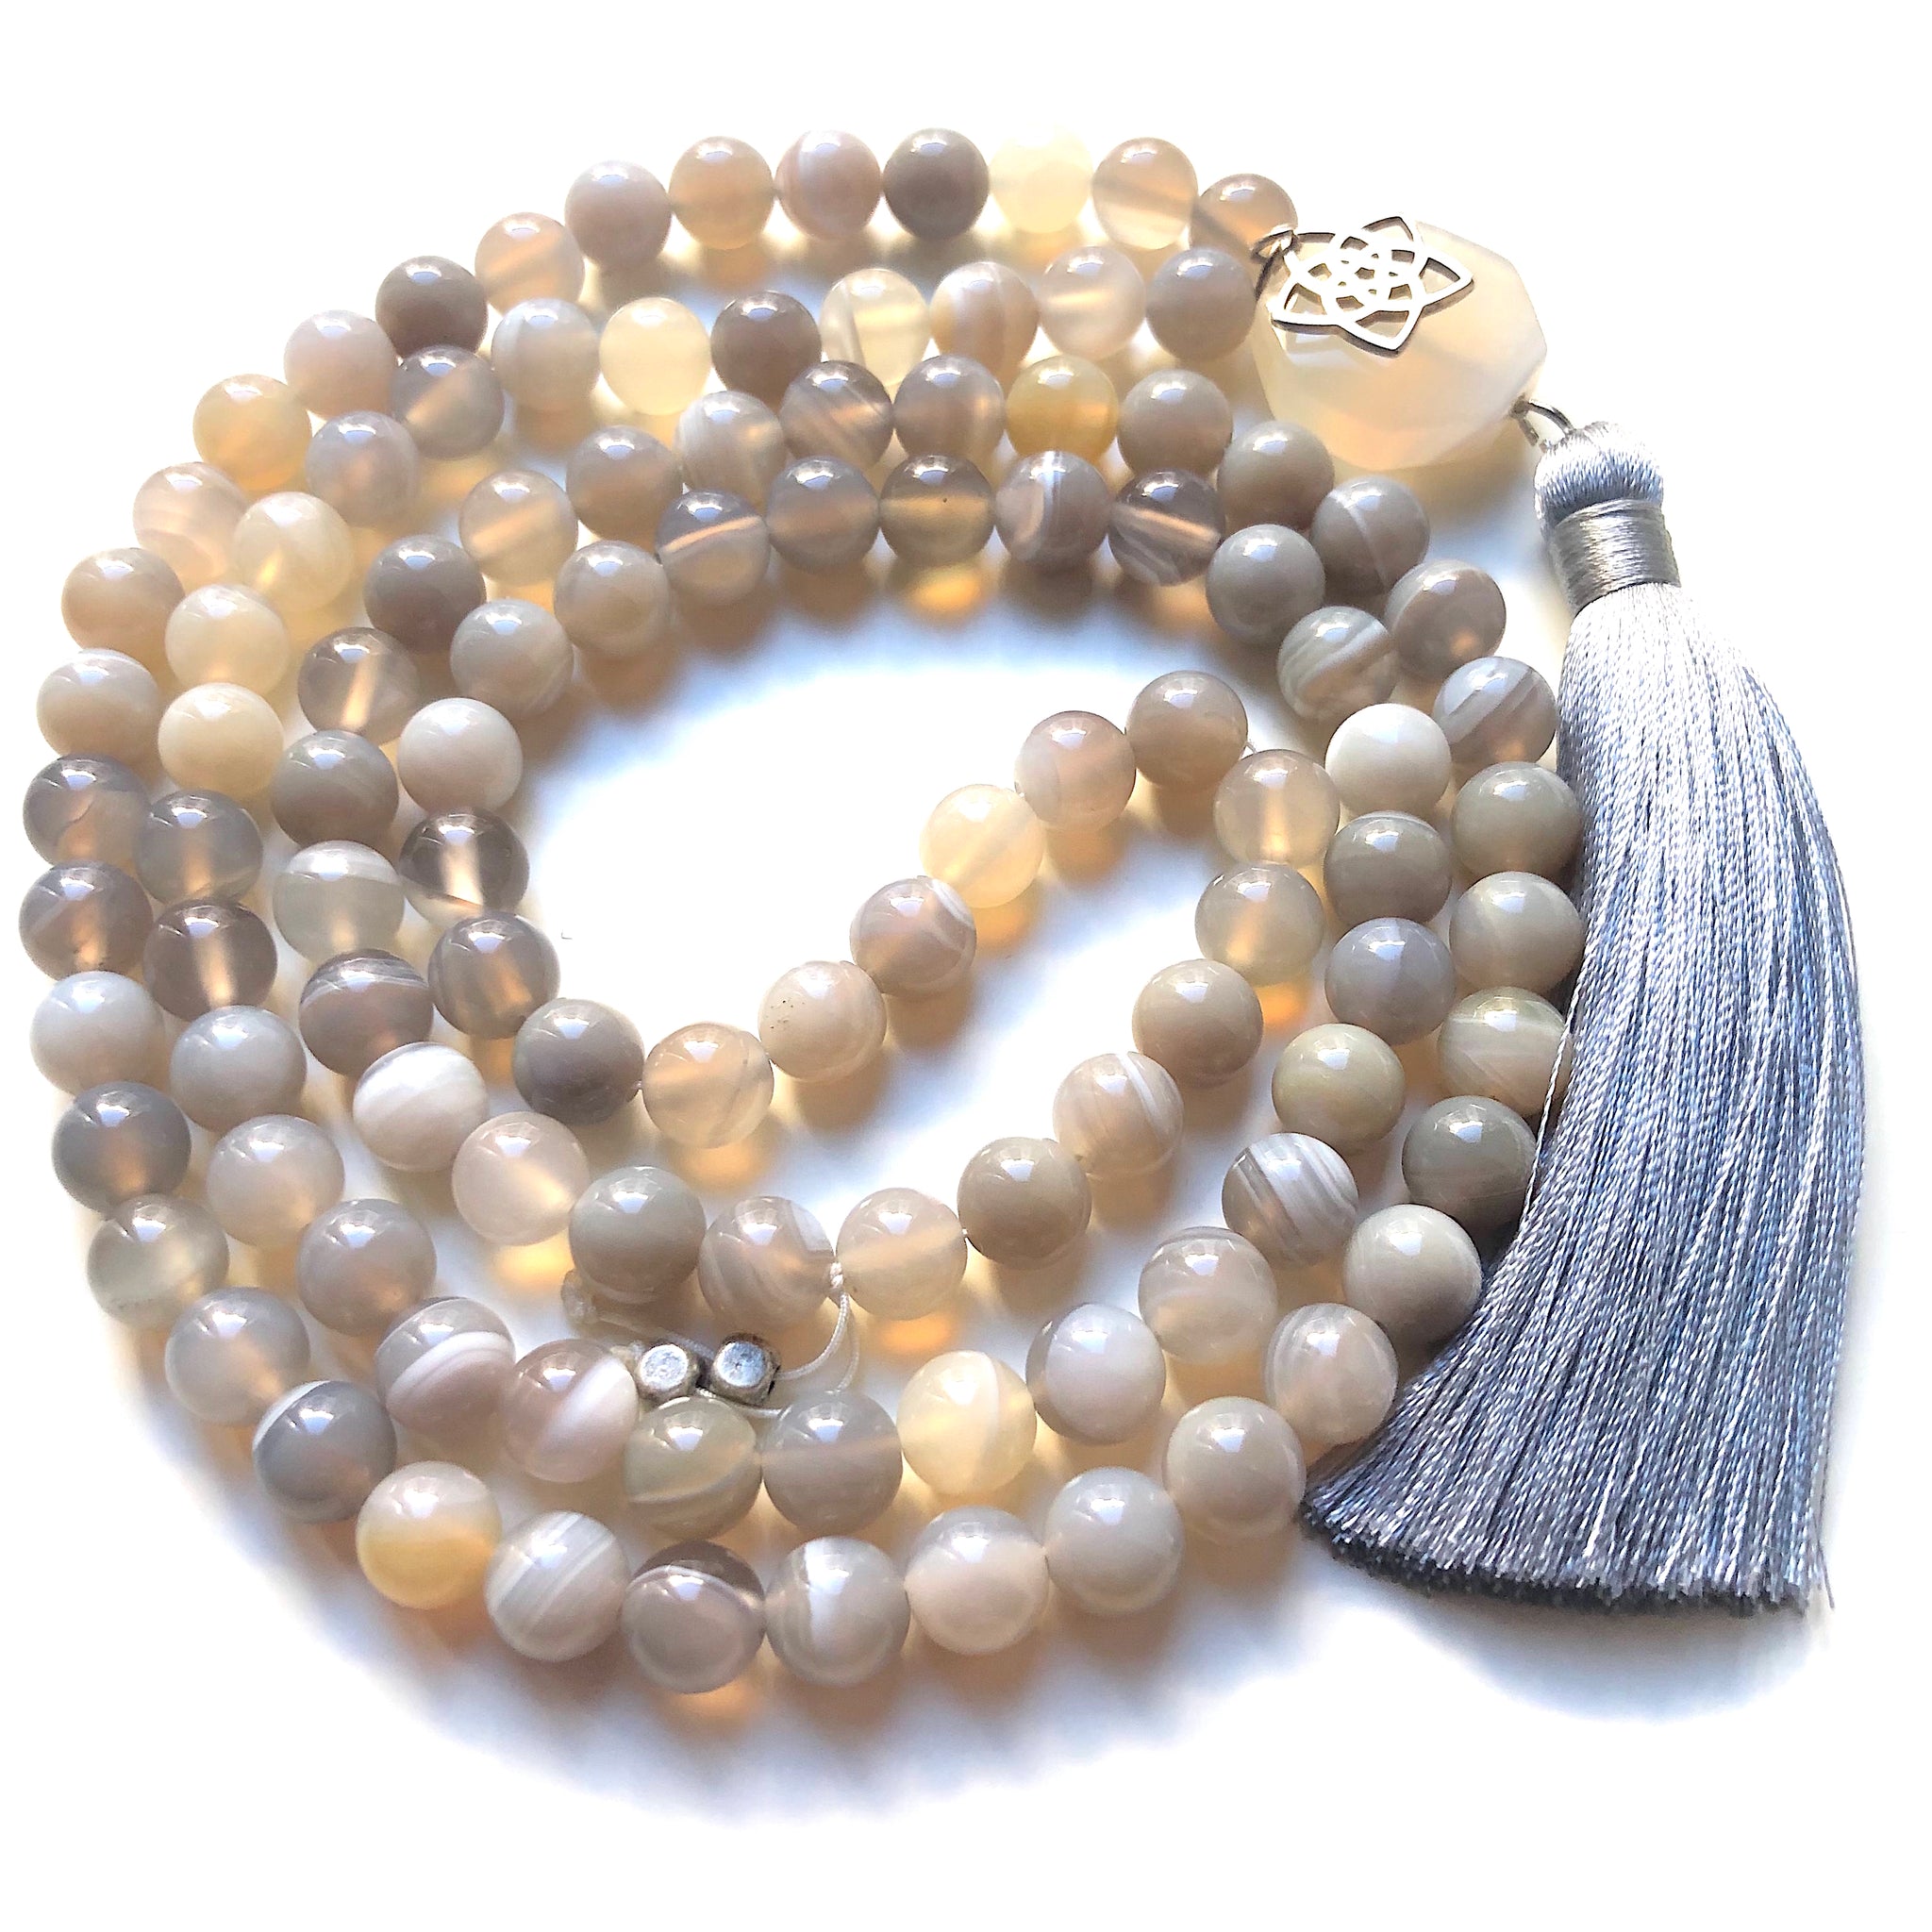 Agate Mala Beads, 108 Mala, Mala Necklace, Mandala, Yoga Schmuck, Meditation